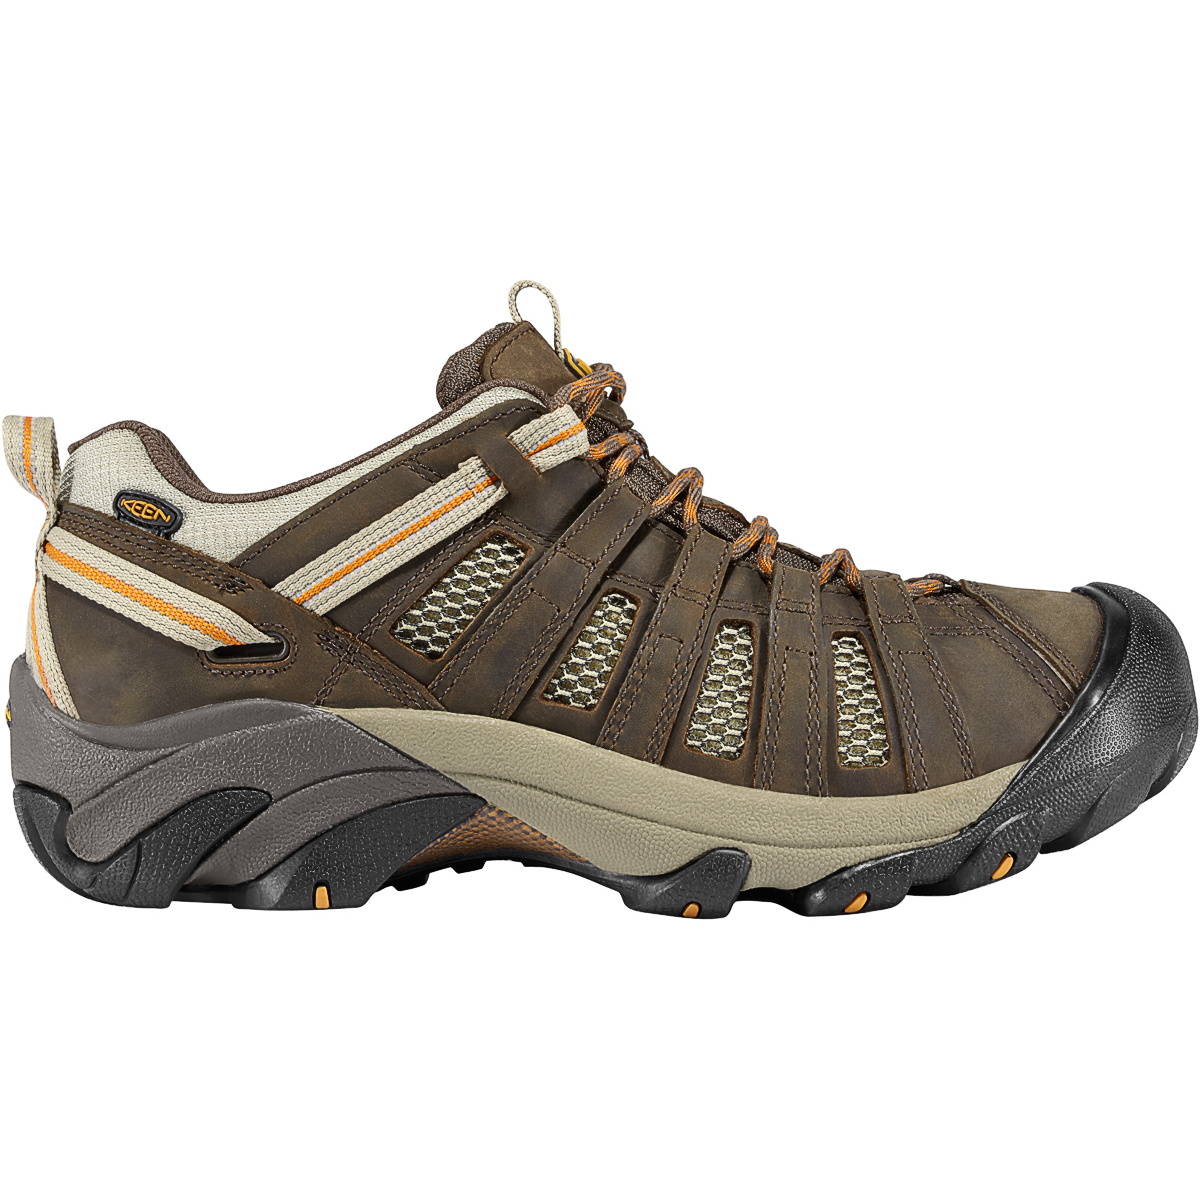 Keen Men's Voyageur Hiking Shoes - Size 13